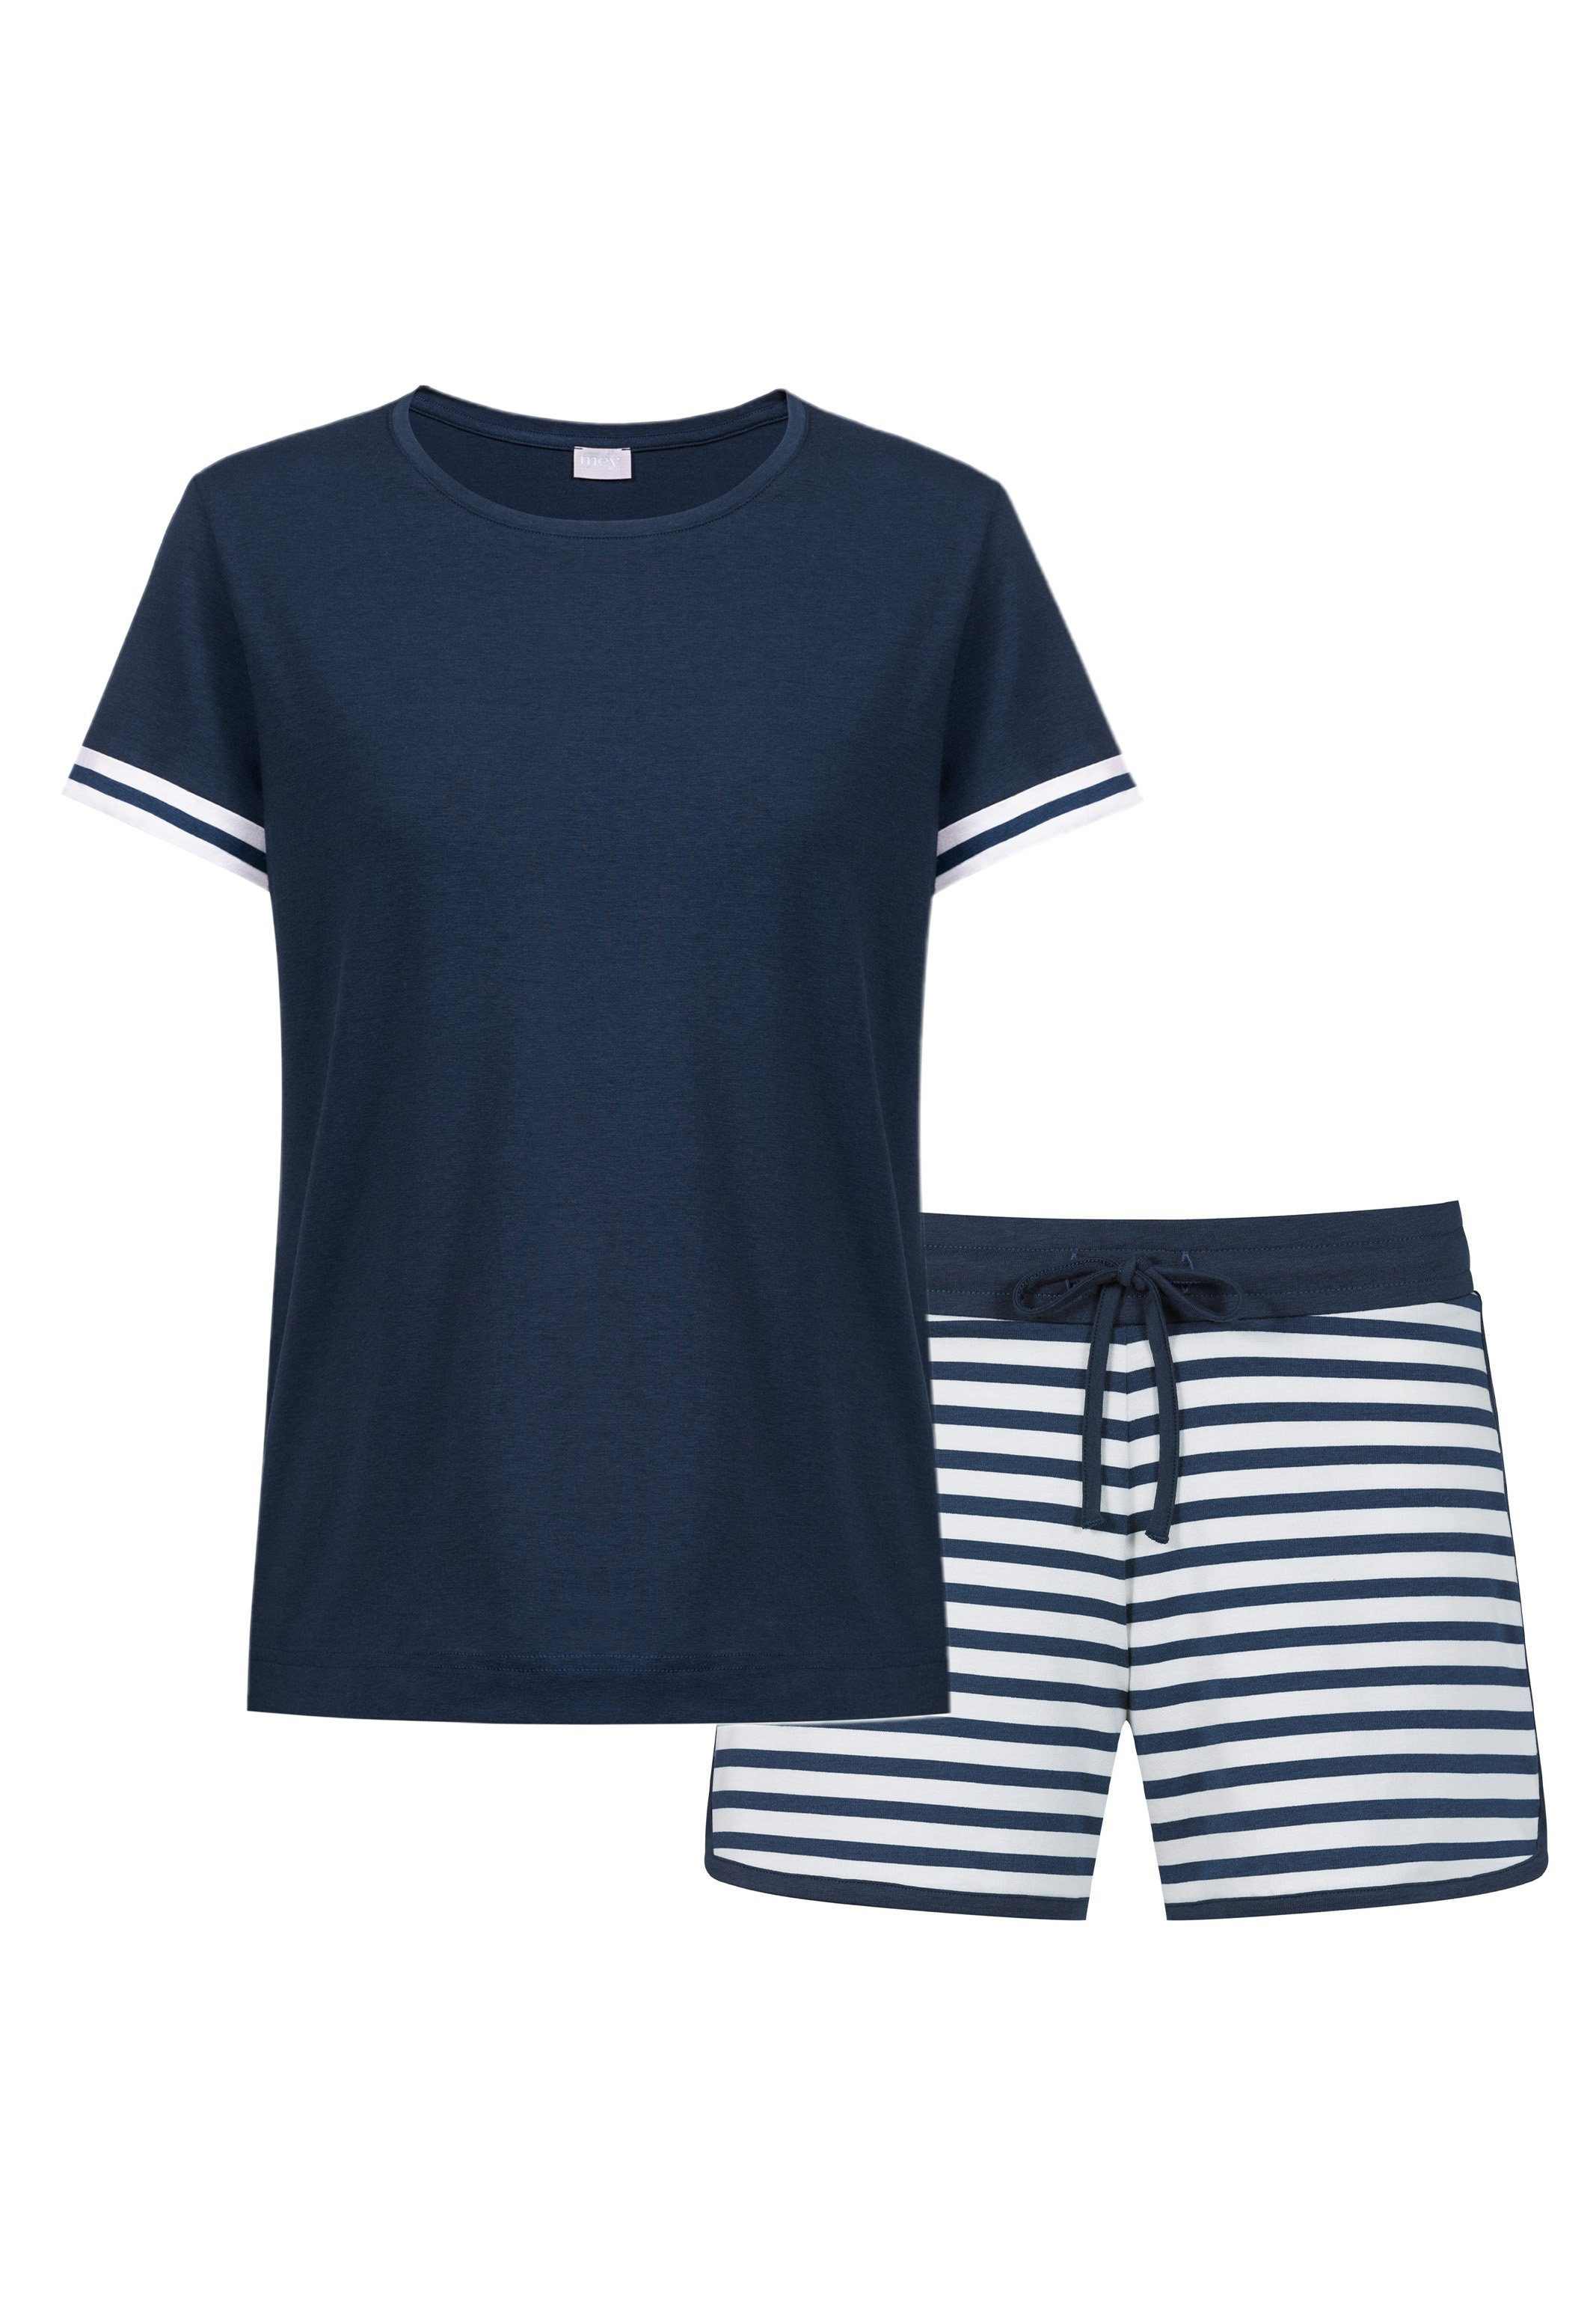 im tlg) und Pyjama kurze Hose - Set (Set, - Kurzarm-Shirt 2 Mey Atmungsaktiv Tessie Schlafanzug